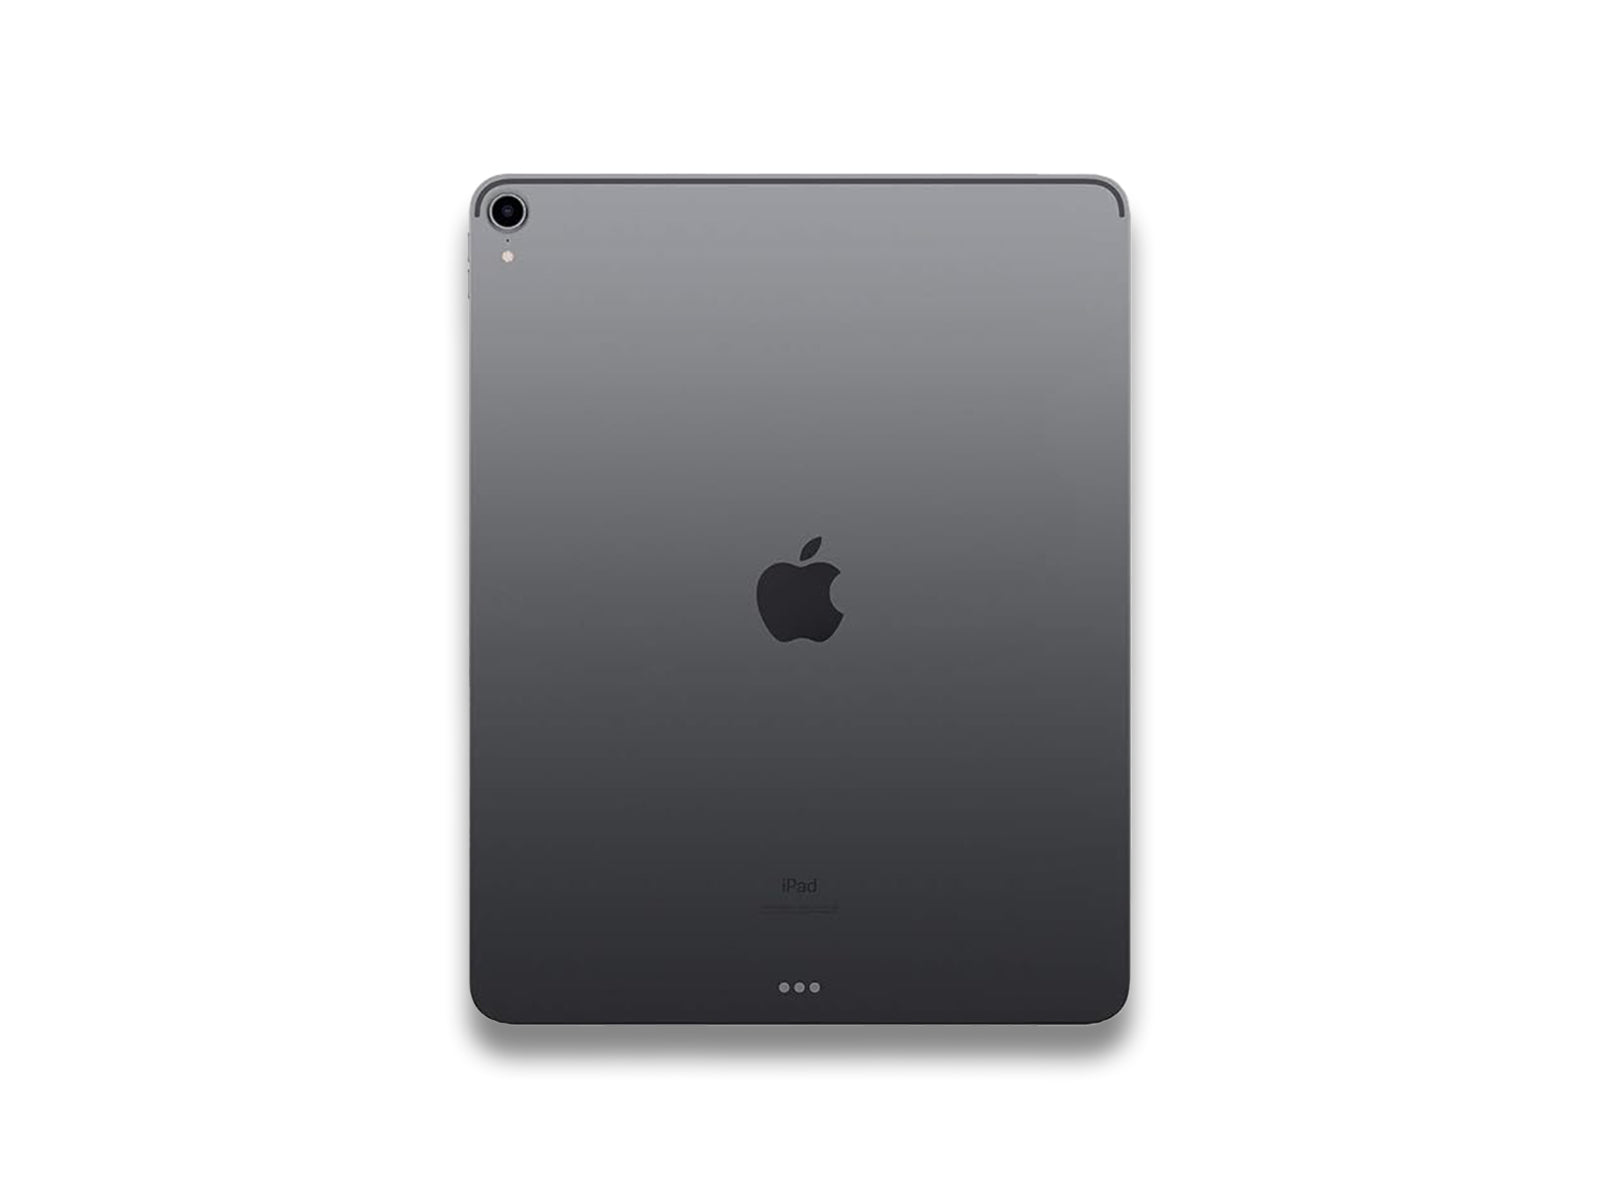 Apple iPad Pro 3rd Generation 12.9-inch back view